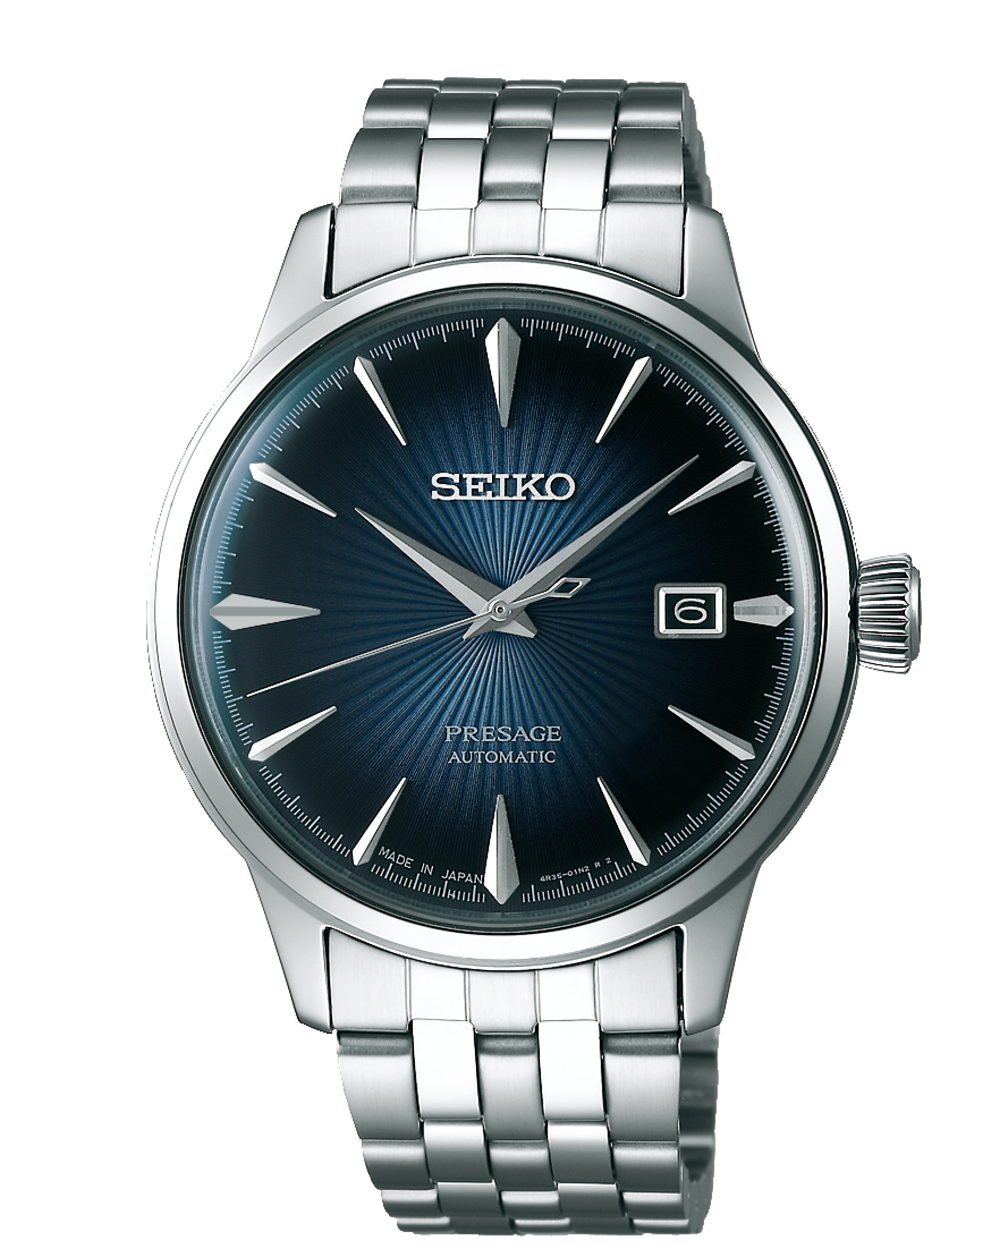 Seiko Men's Presage Watch in Silver | Angus & Coote